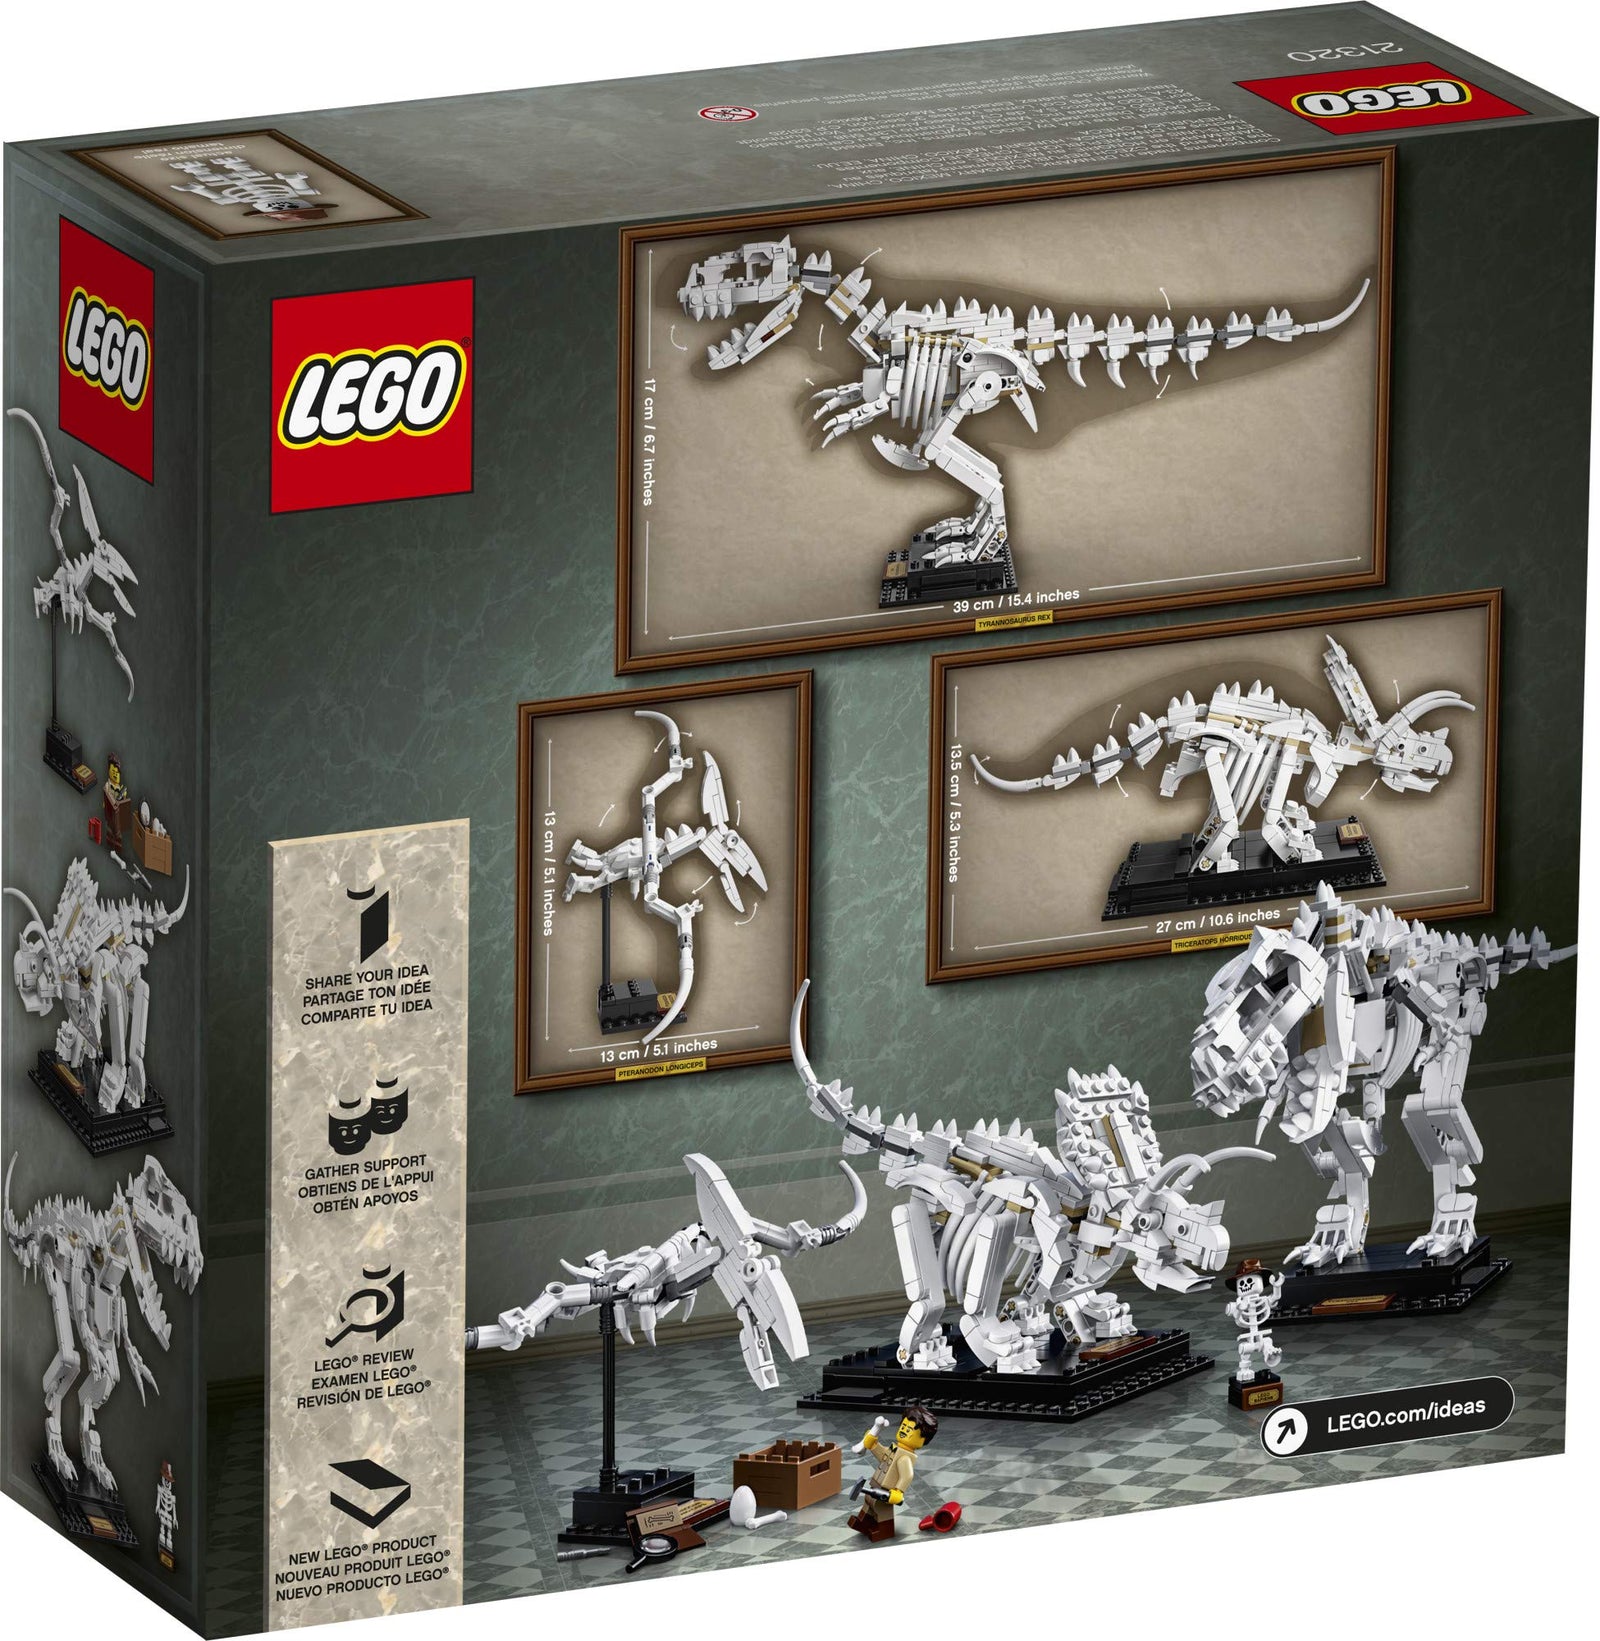 LEGO Ideas 21320 Dinosaur Fossils Building Kit (910 Pieces)